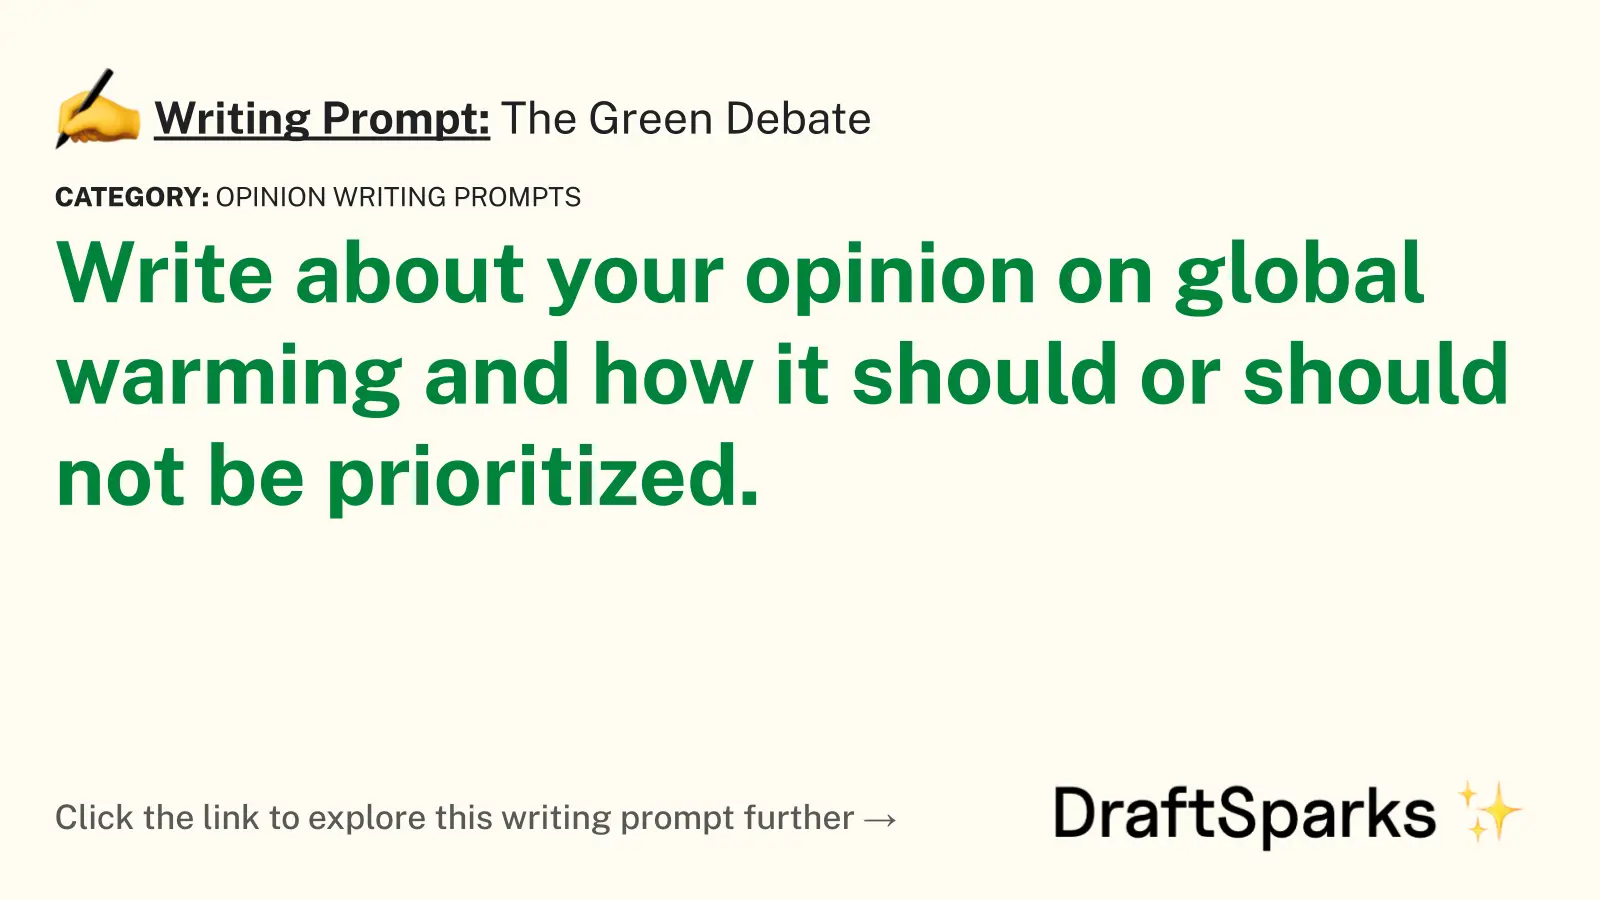 The Green Debate